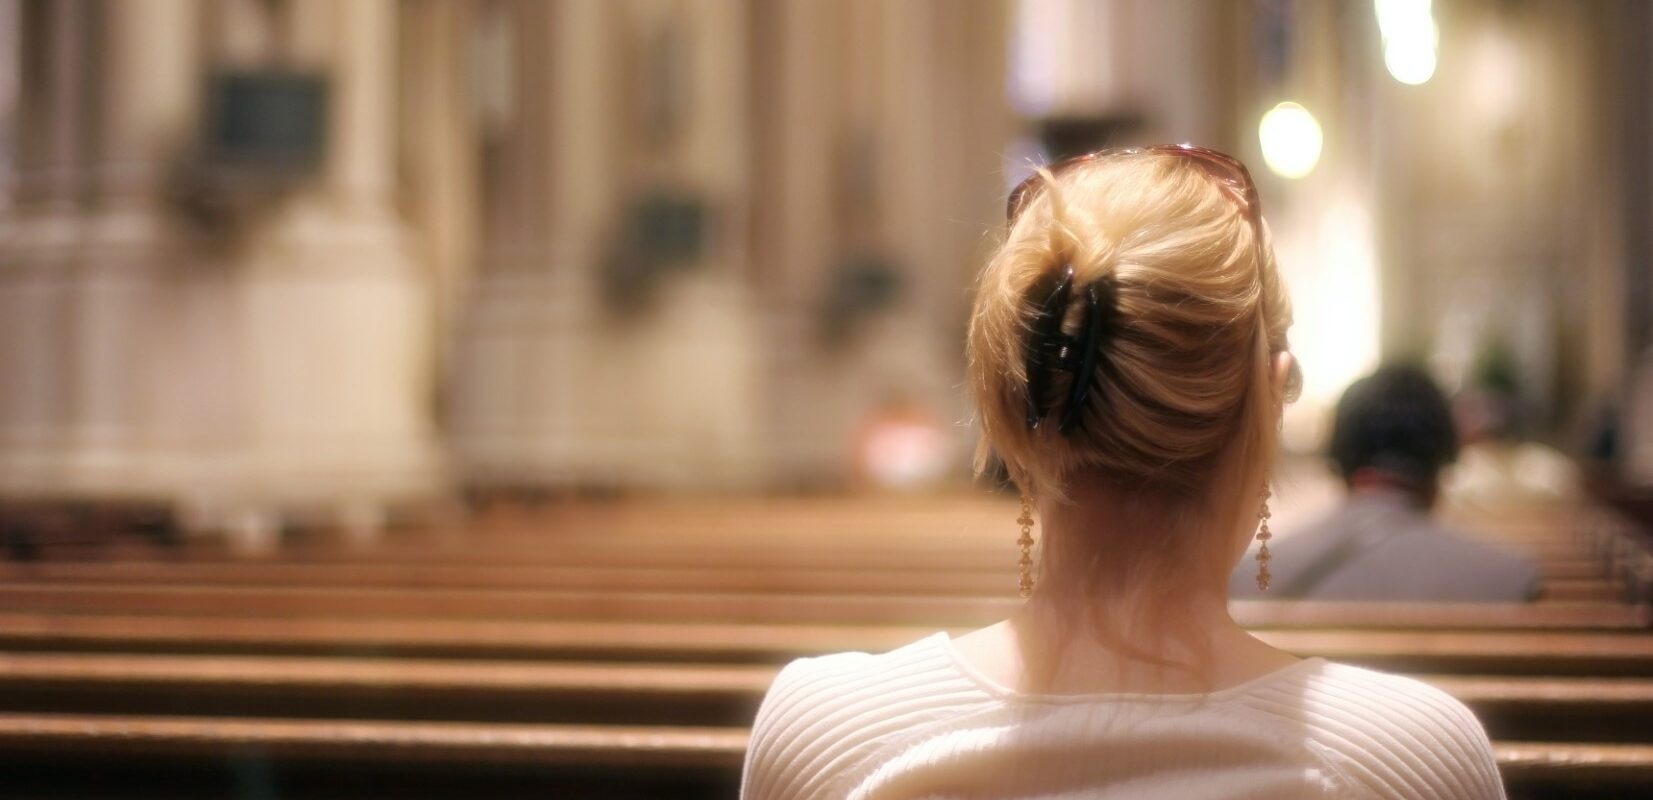 Blonde woman sitting on a church bench praying